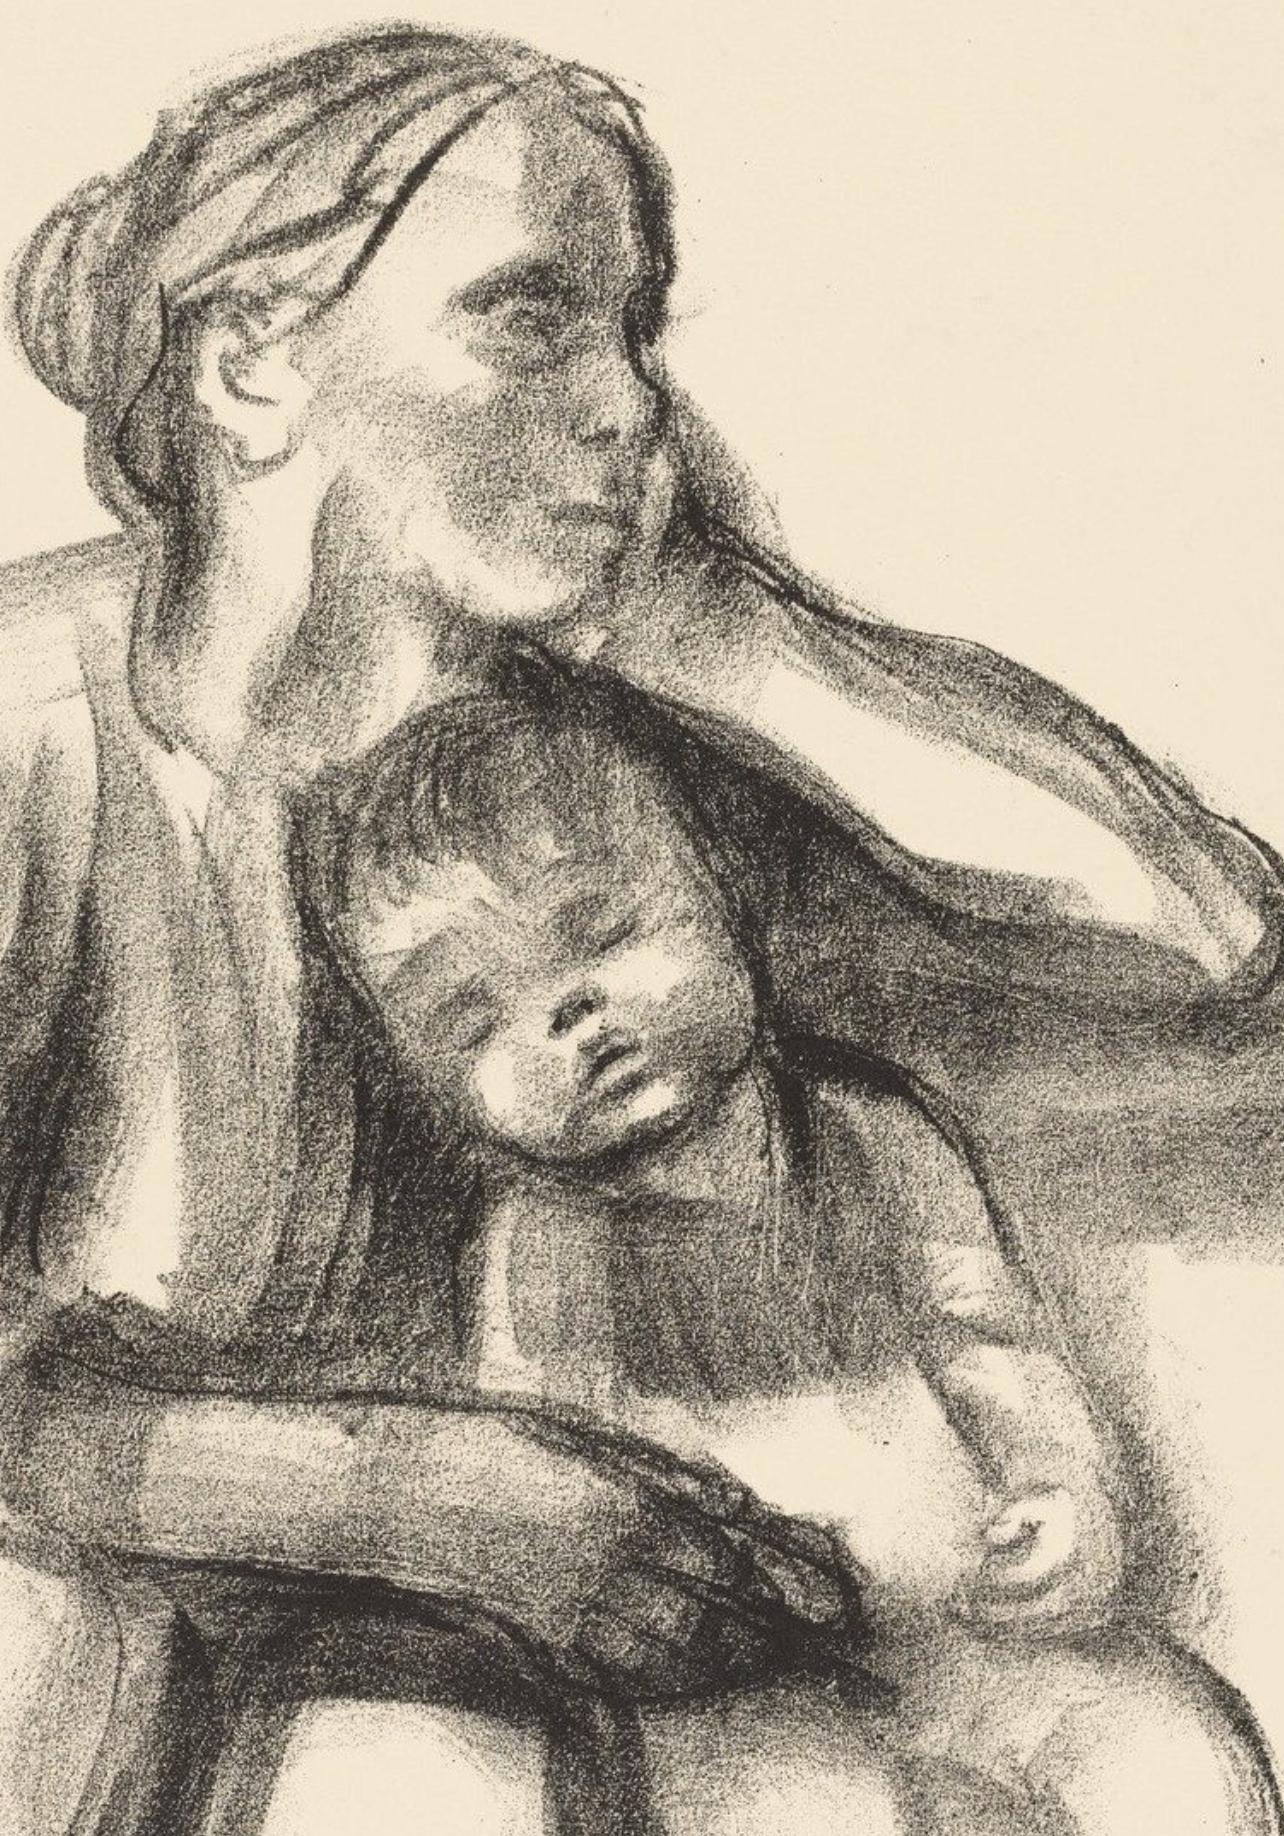 Kollwitz, Working-Class Woman with Sleeping Child  (after) - Print by Käthe Kollwitz